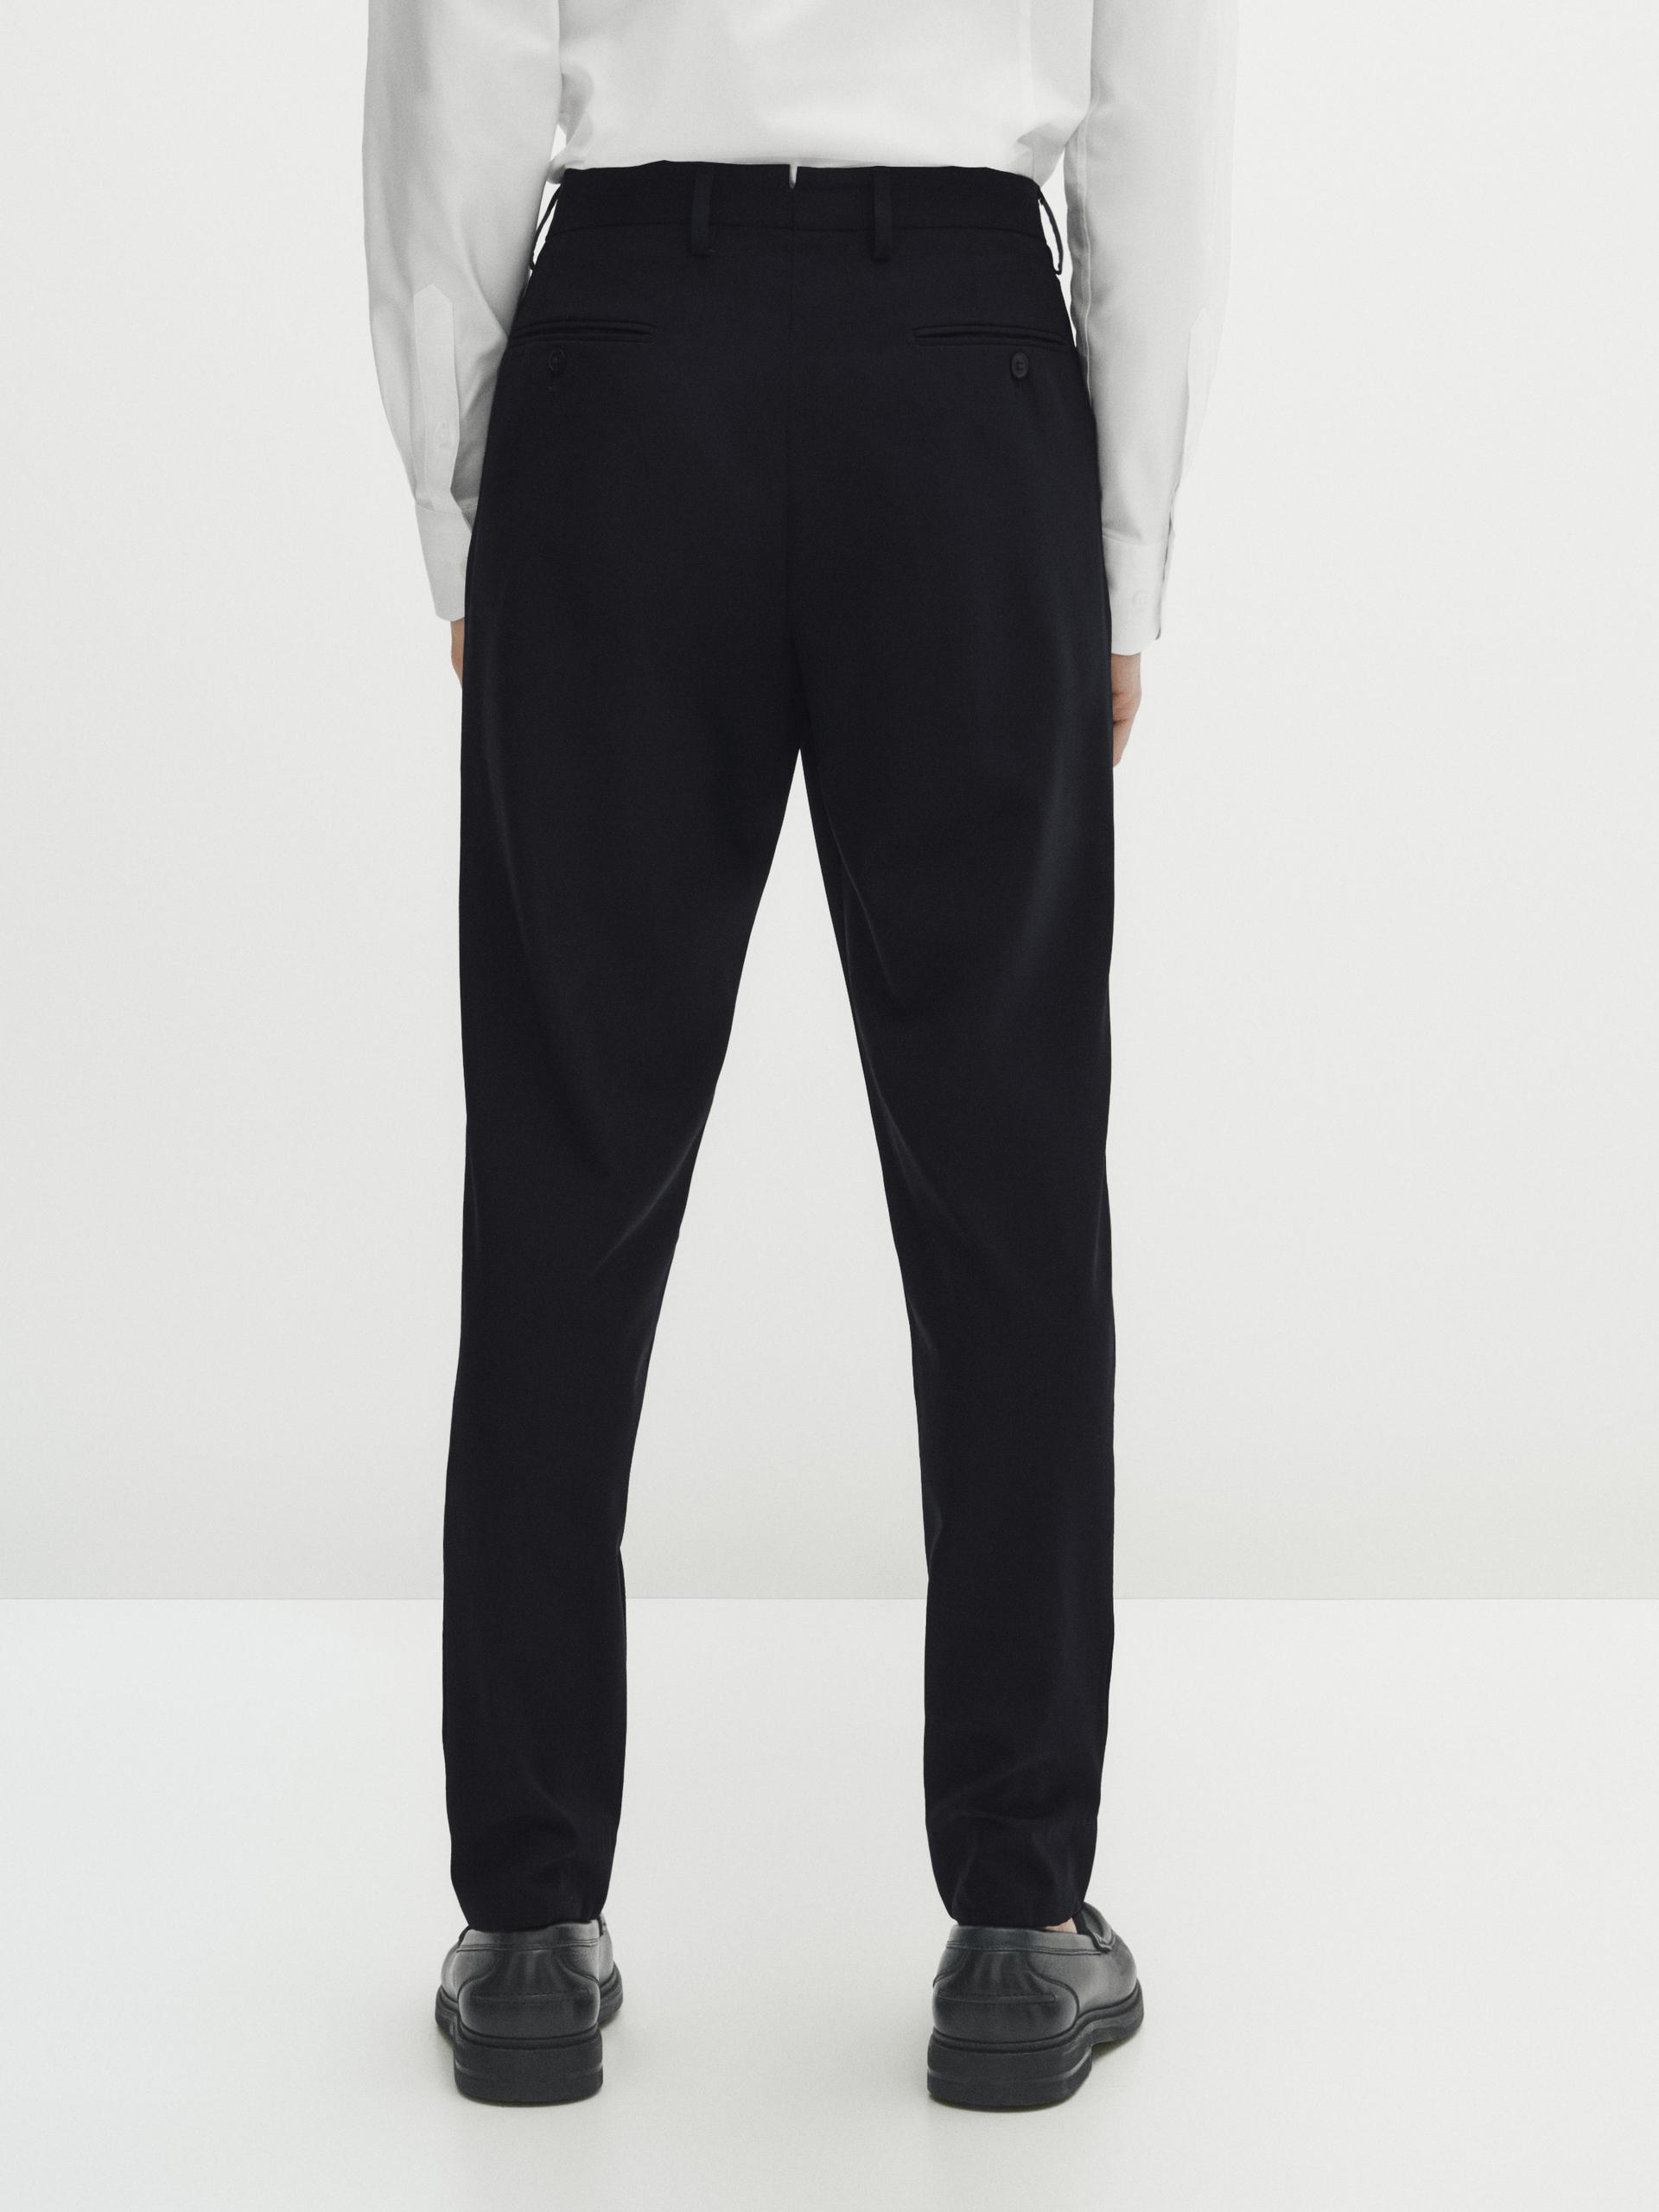 Zara Dress Pants Men's 38x30 Slacks Black Formal Virgin Wool Adults